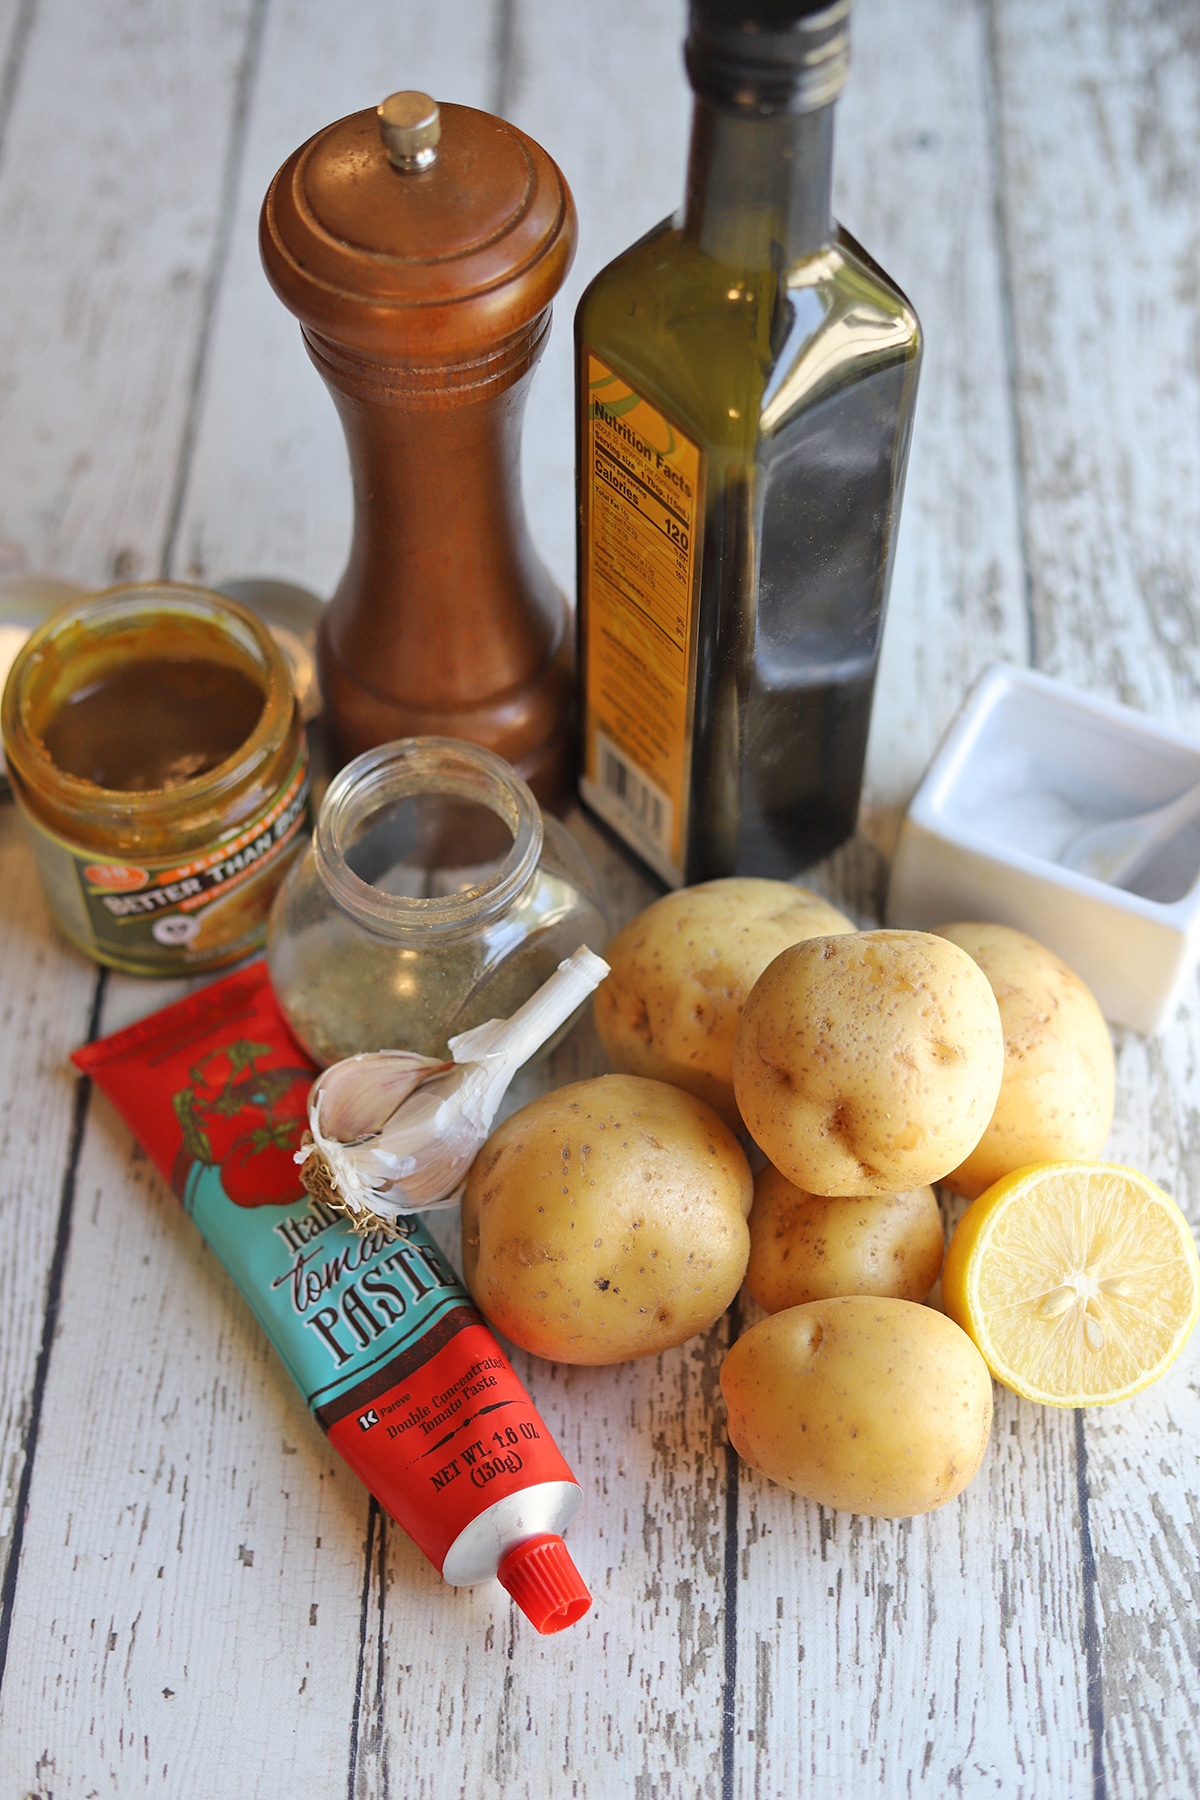 Ingredients for lemony potatoes: tomato paste, Yukon gold potatoes, salt, oregano, garlic, bouillon, pepper, and olive oil.